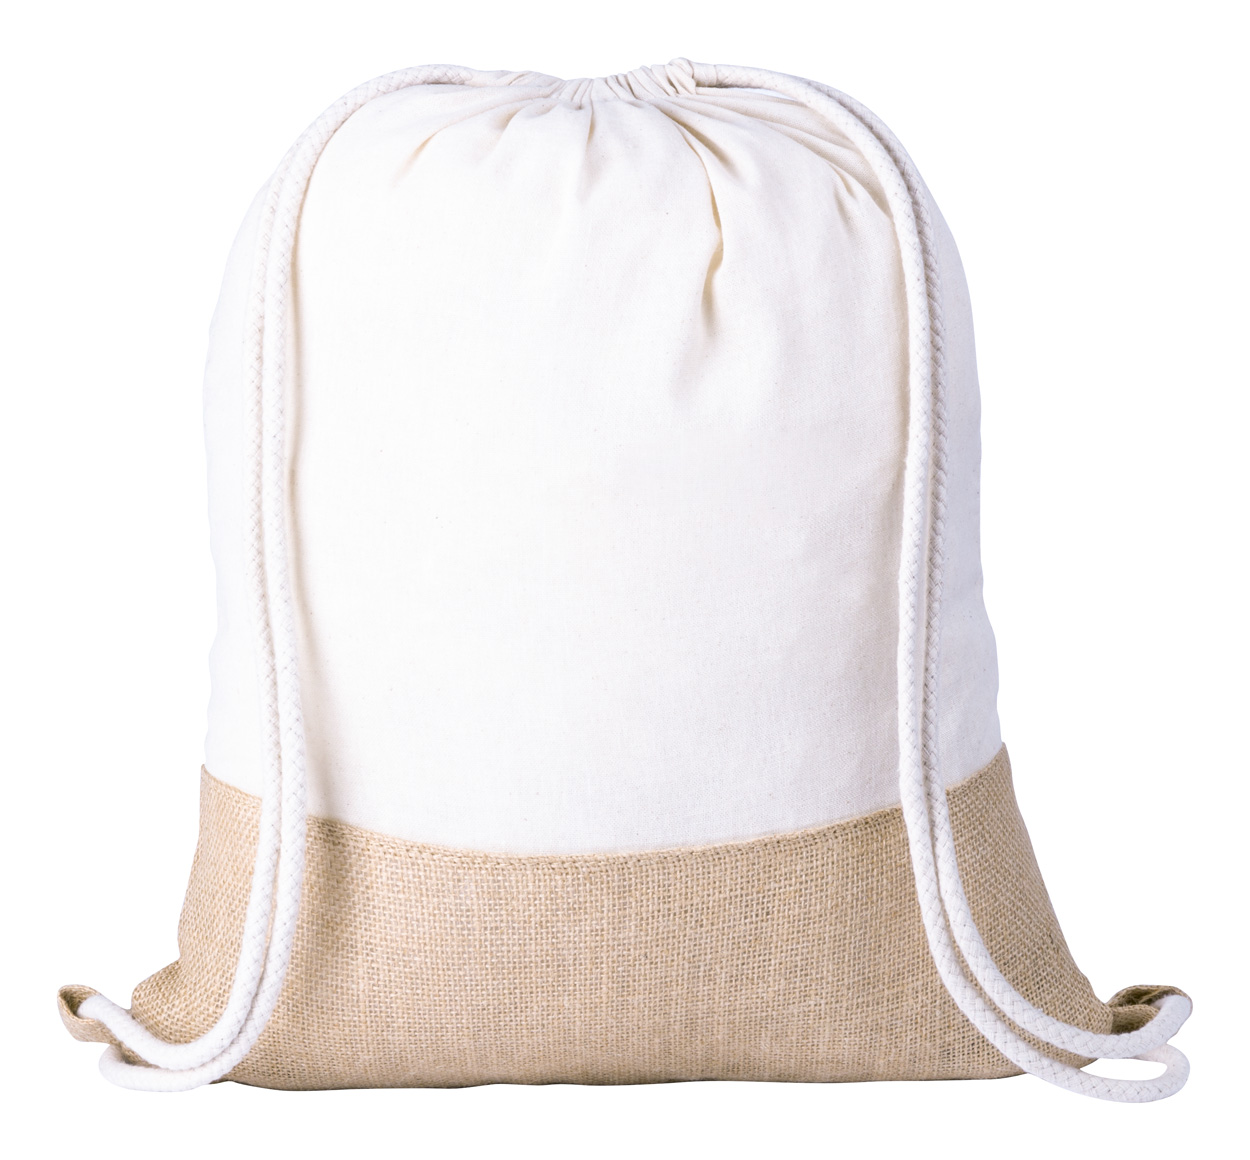 Cloth drawstring backpack BADIX with jute detail - white / natural